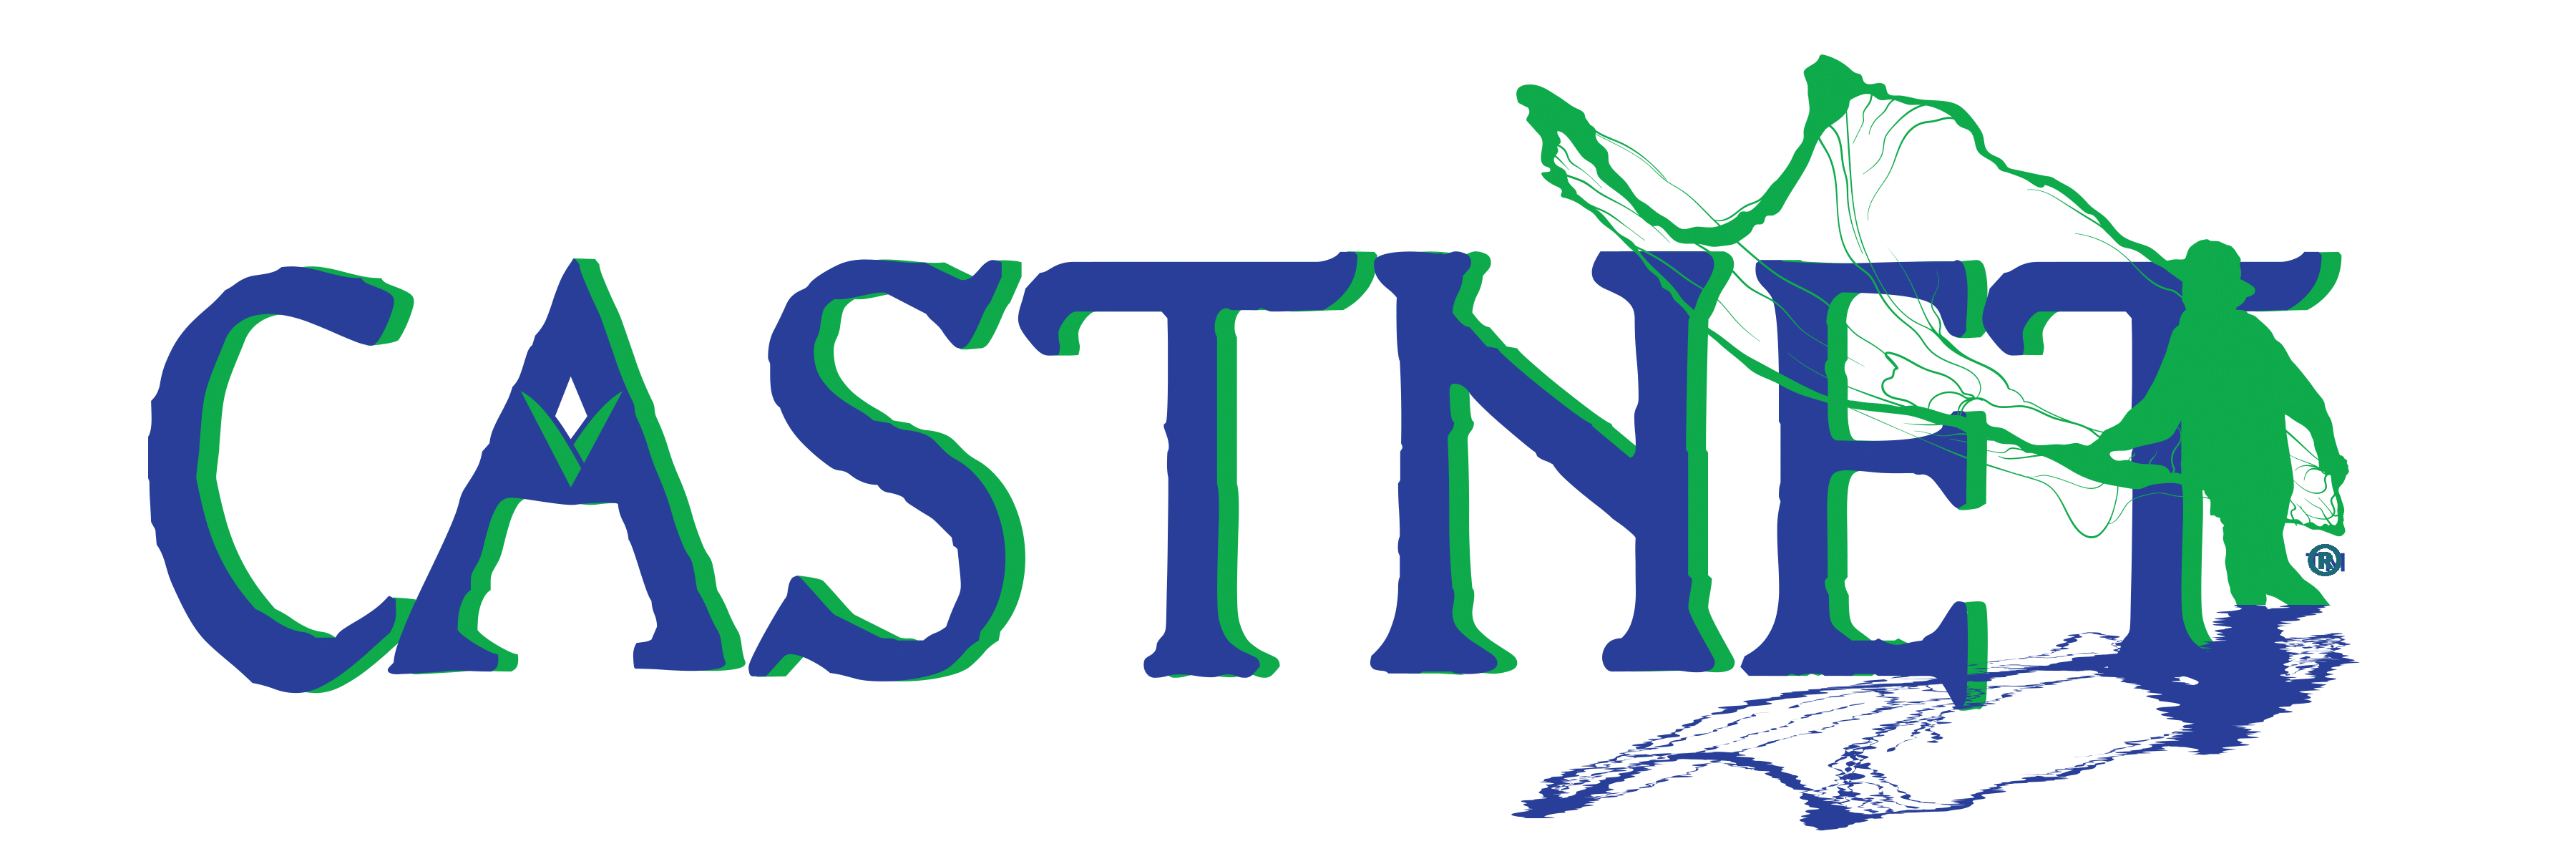 CastNet logo